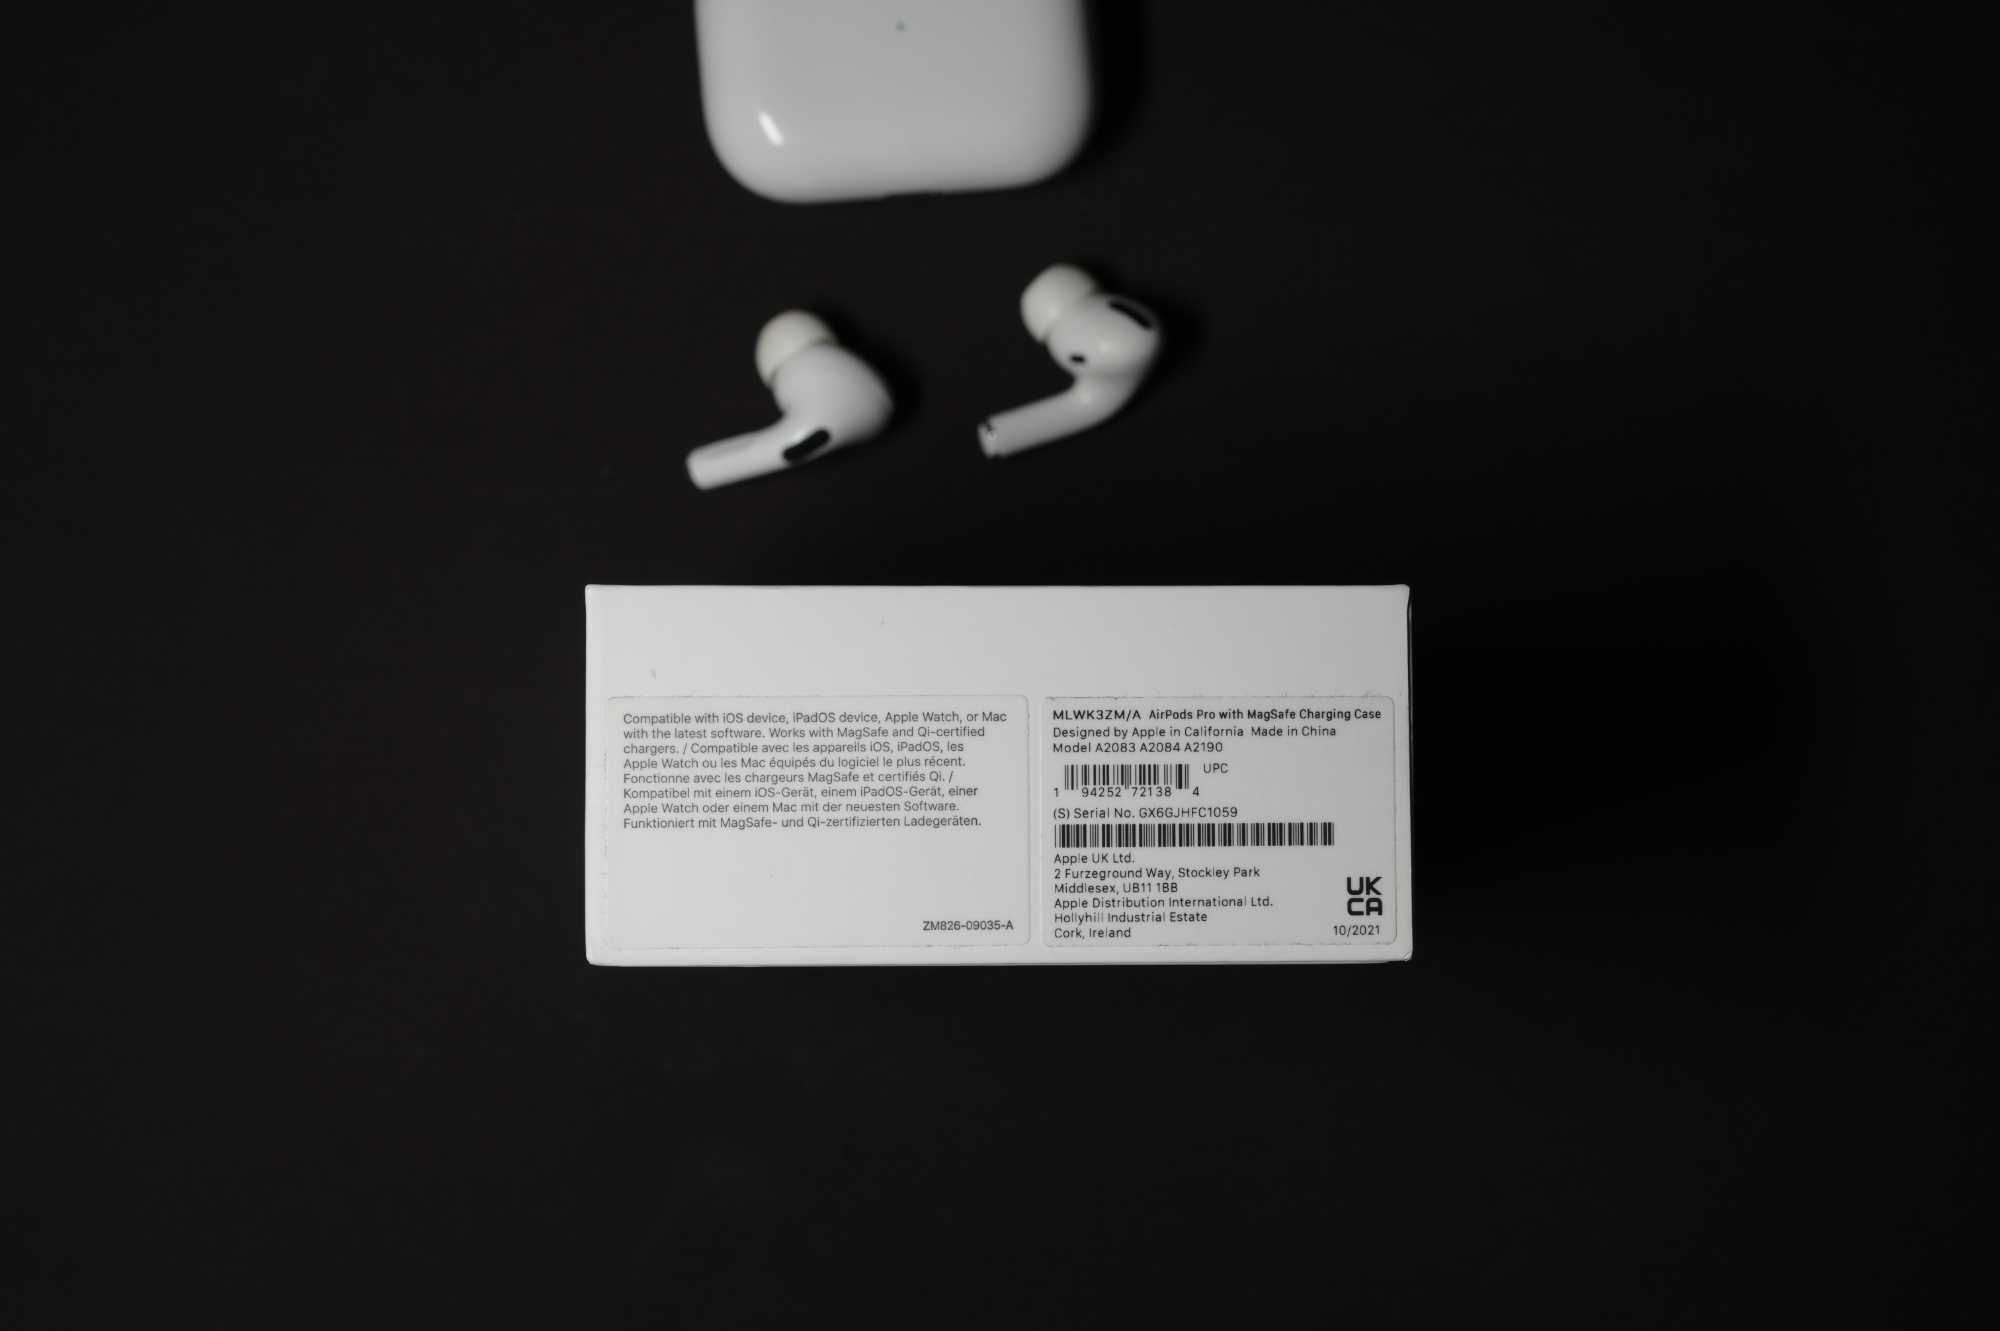 Apple Airpods Pro (gen 1) Originale